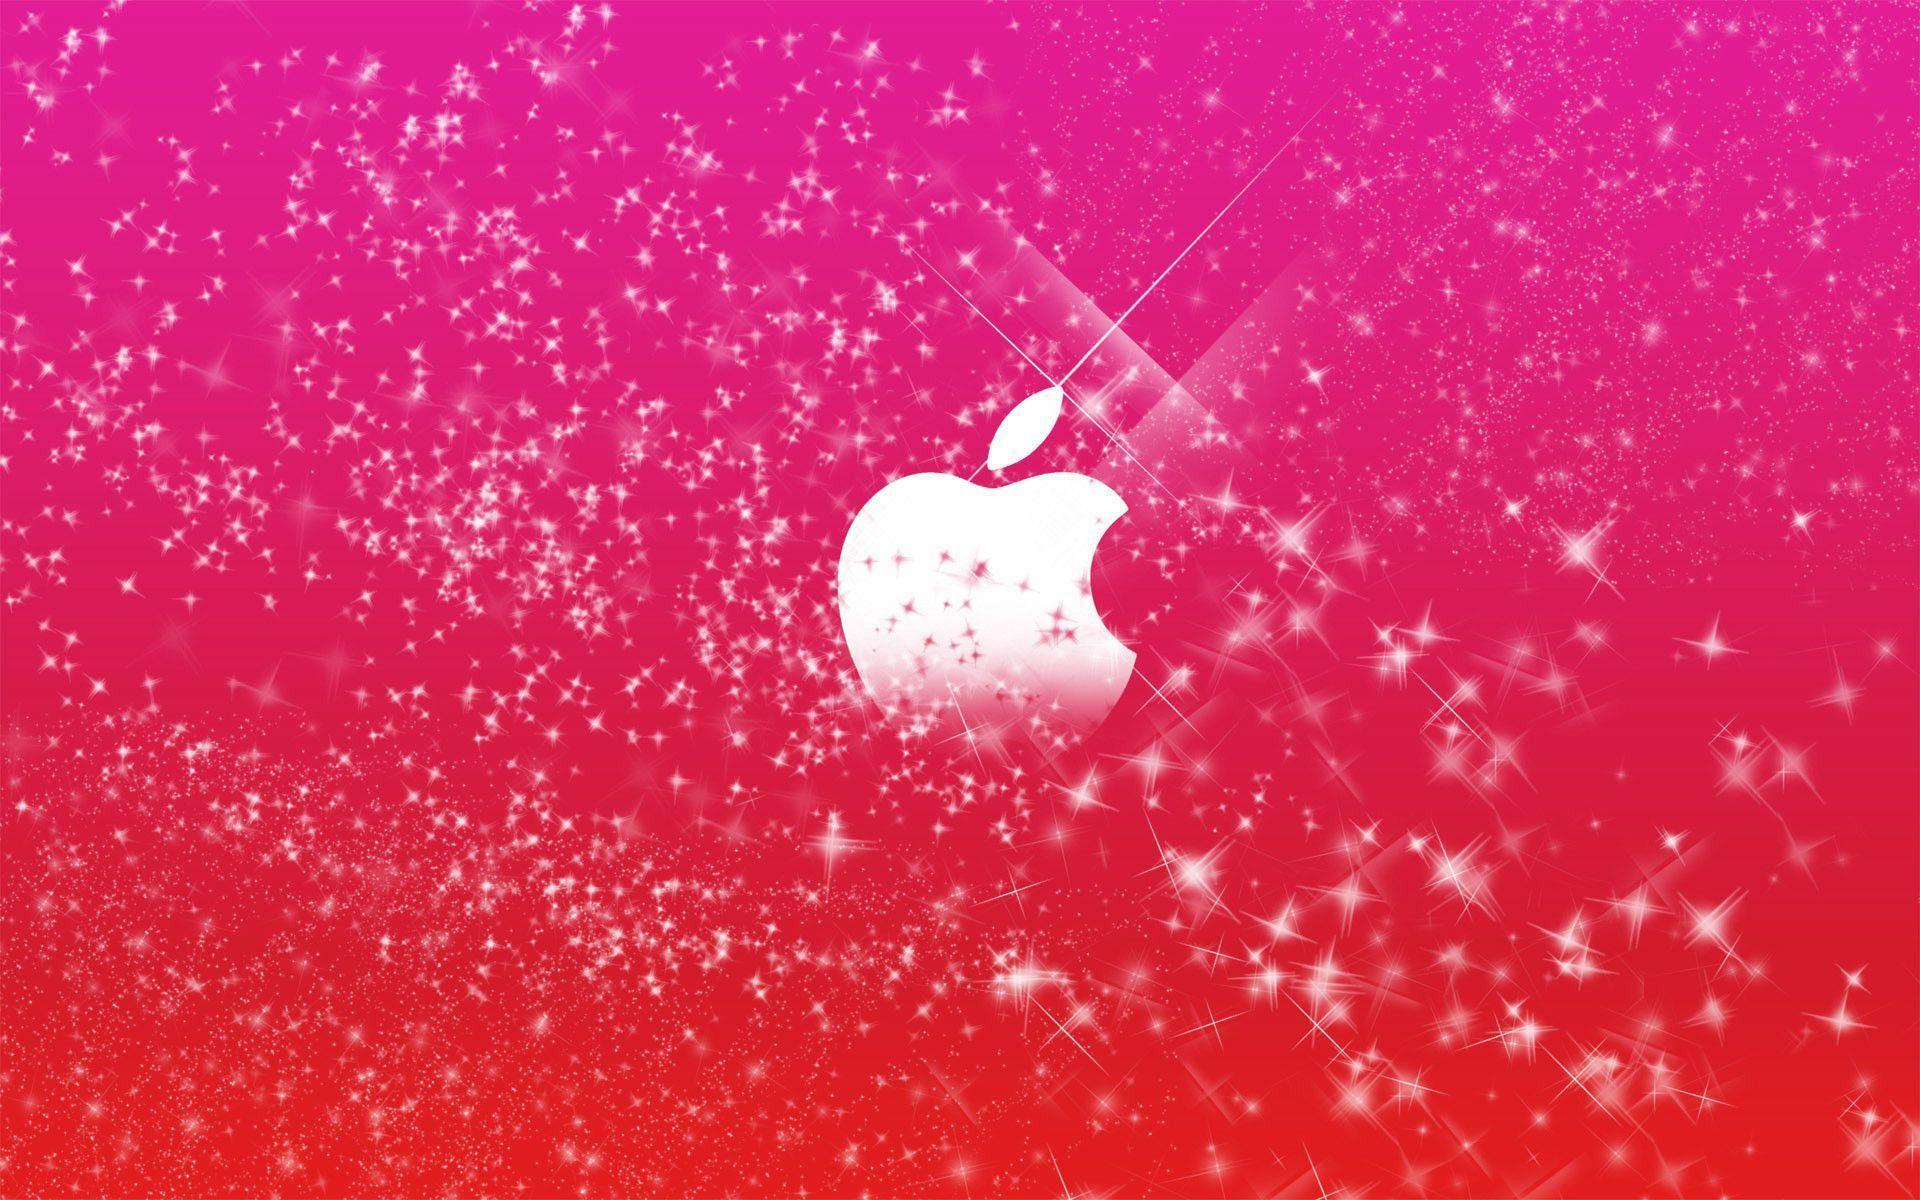 Sparkling Apple logo wallpaper #